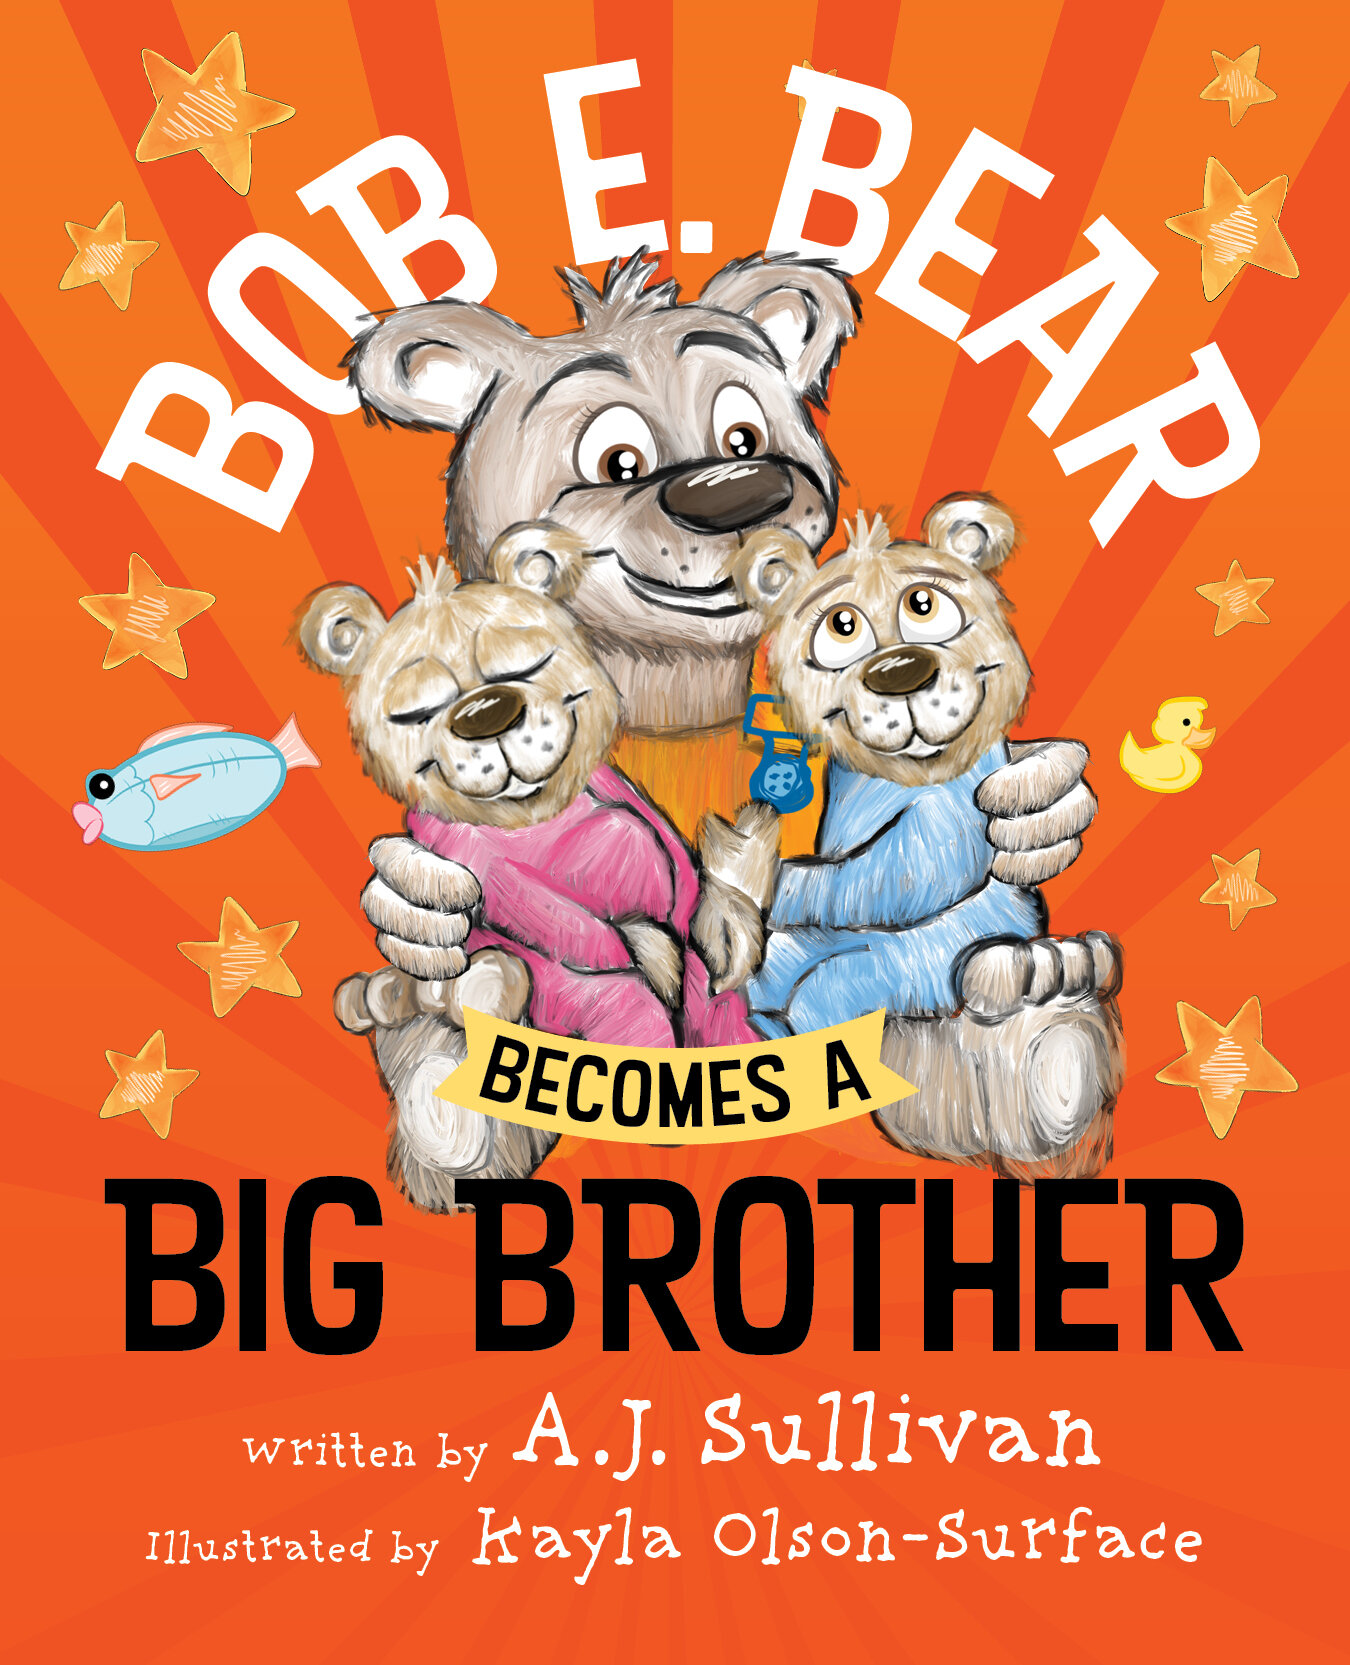 Bob_E_Bear_Brother-COVER.jpg